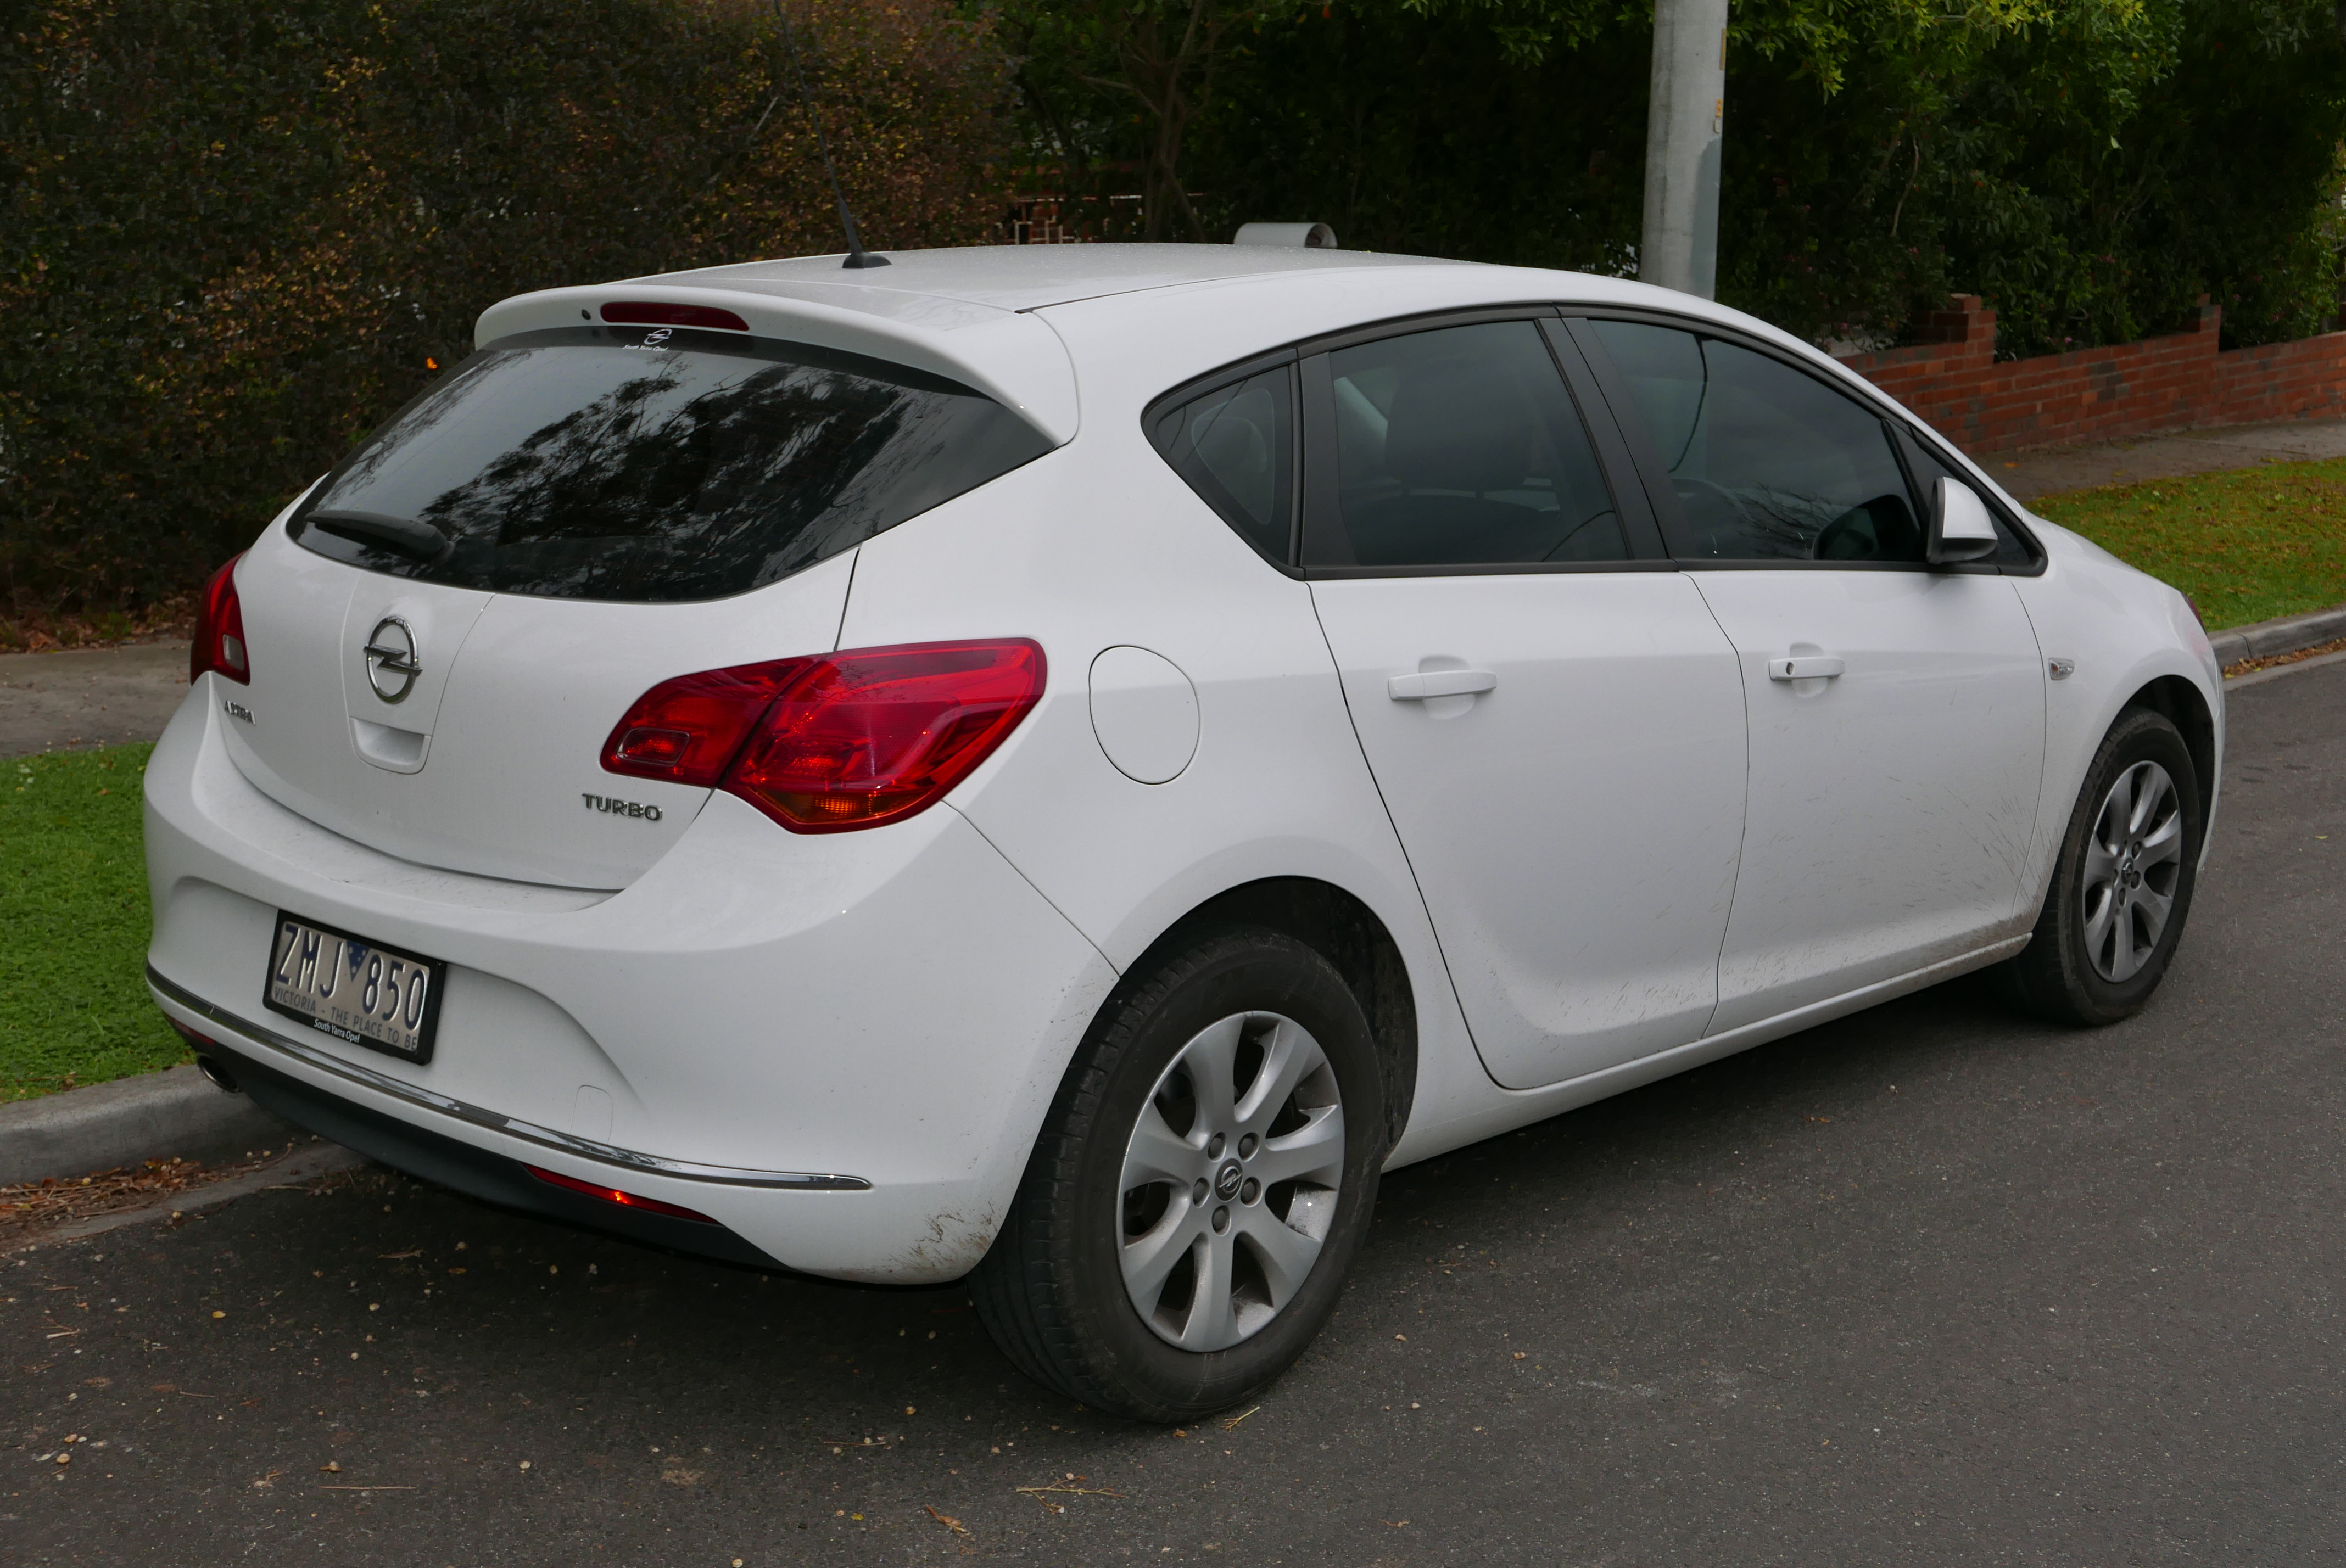 Opel Astra Hatchback exterior big